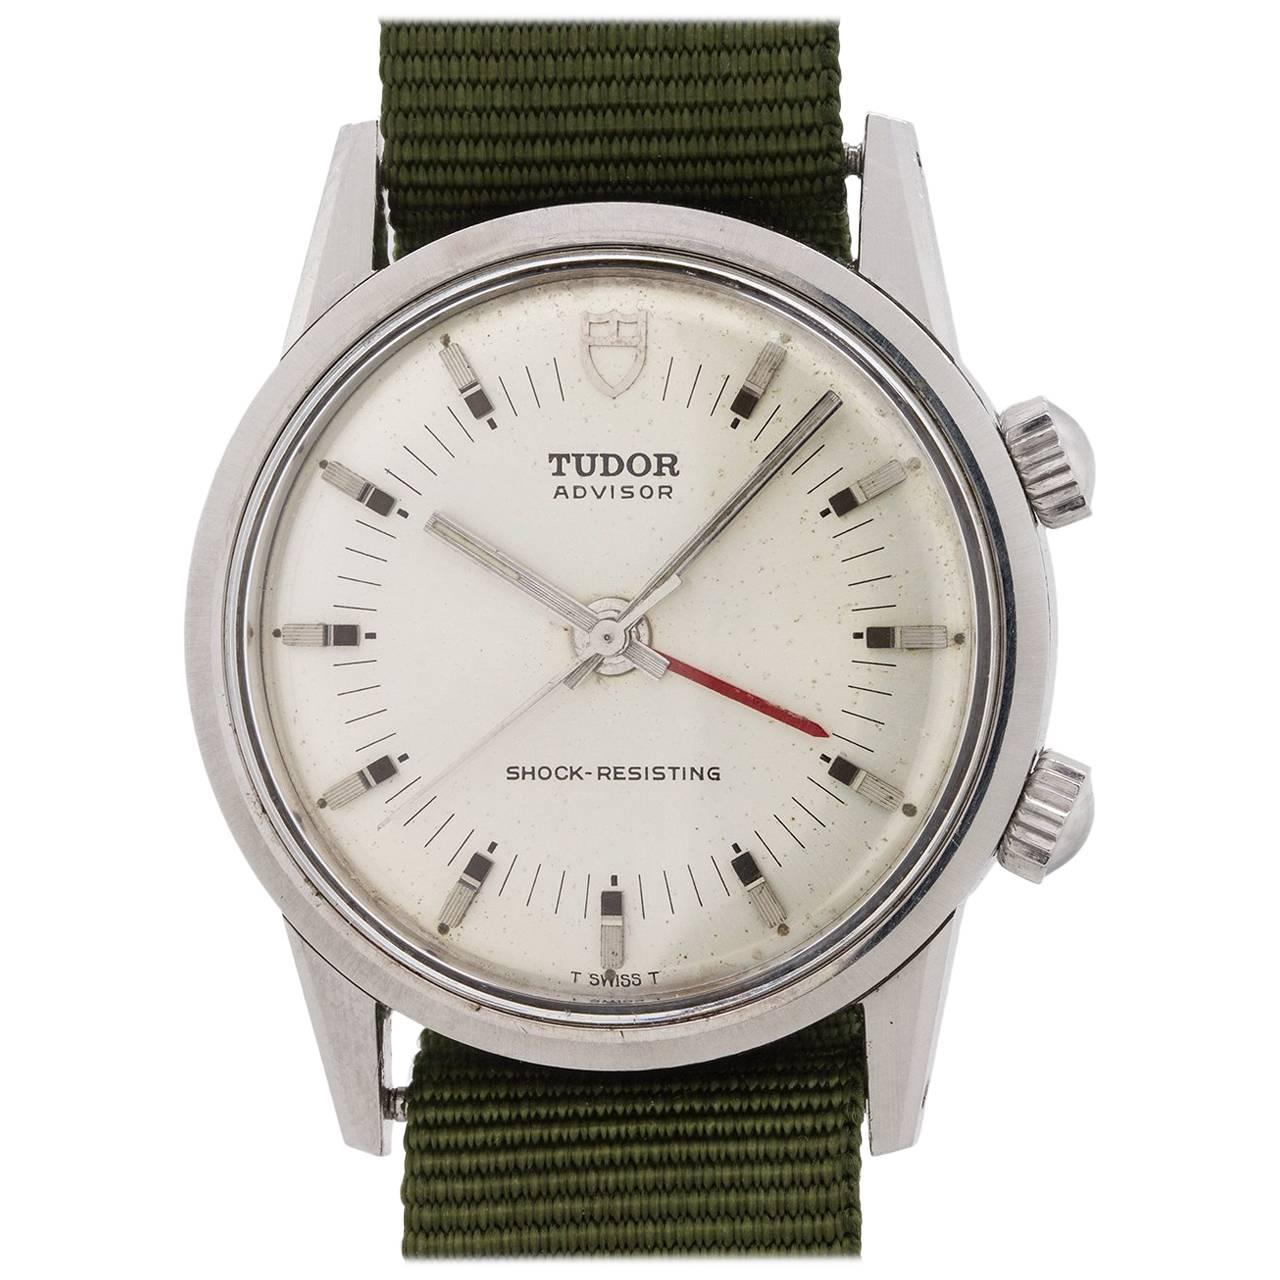 Tudor Stainless Steel Advisor Alarm Manual Wristwatch Ref 10050, circa 1982 For Sale